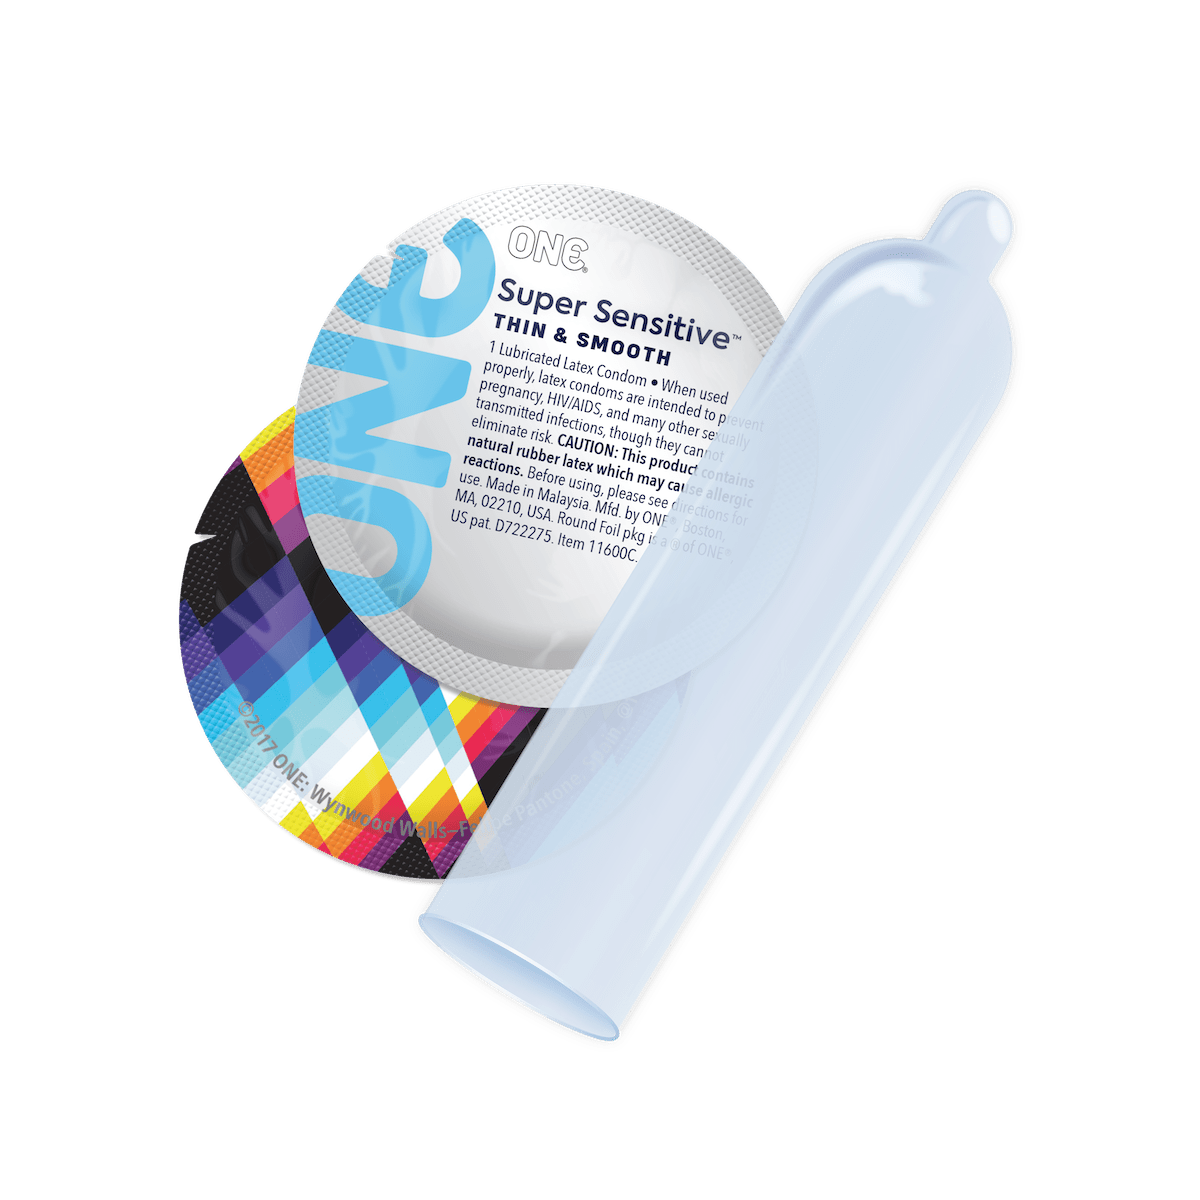 ONE Super Sensitive Condoms - 12 Pack